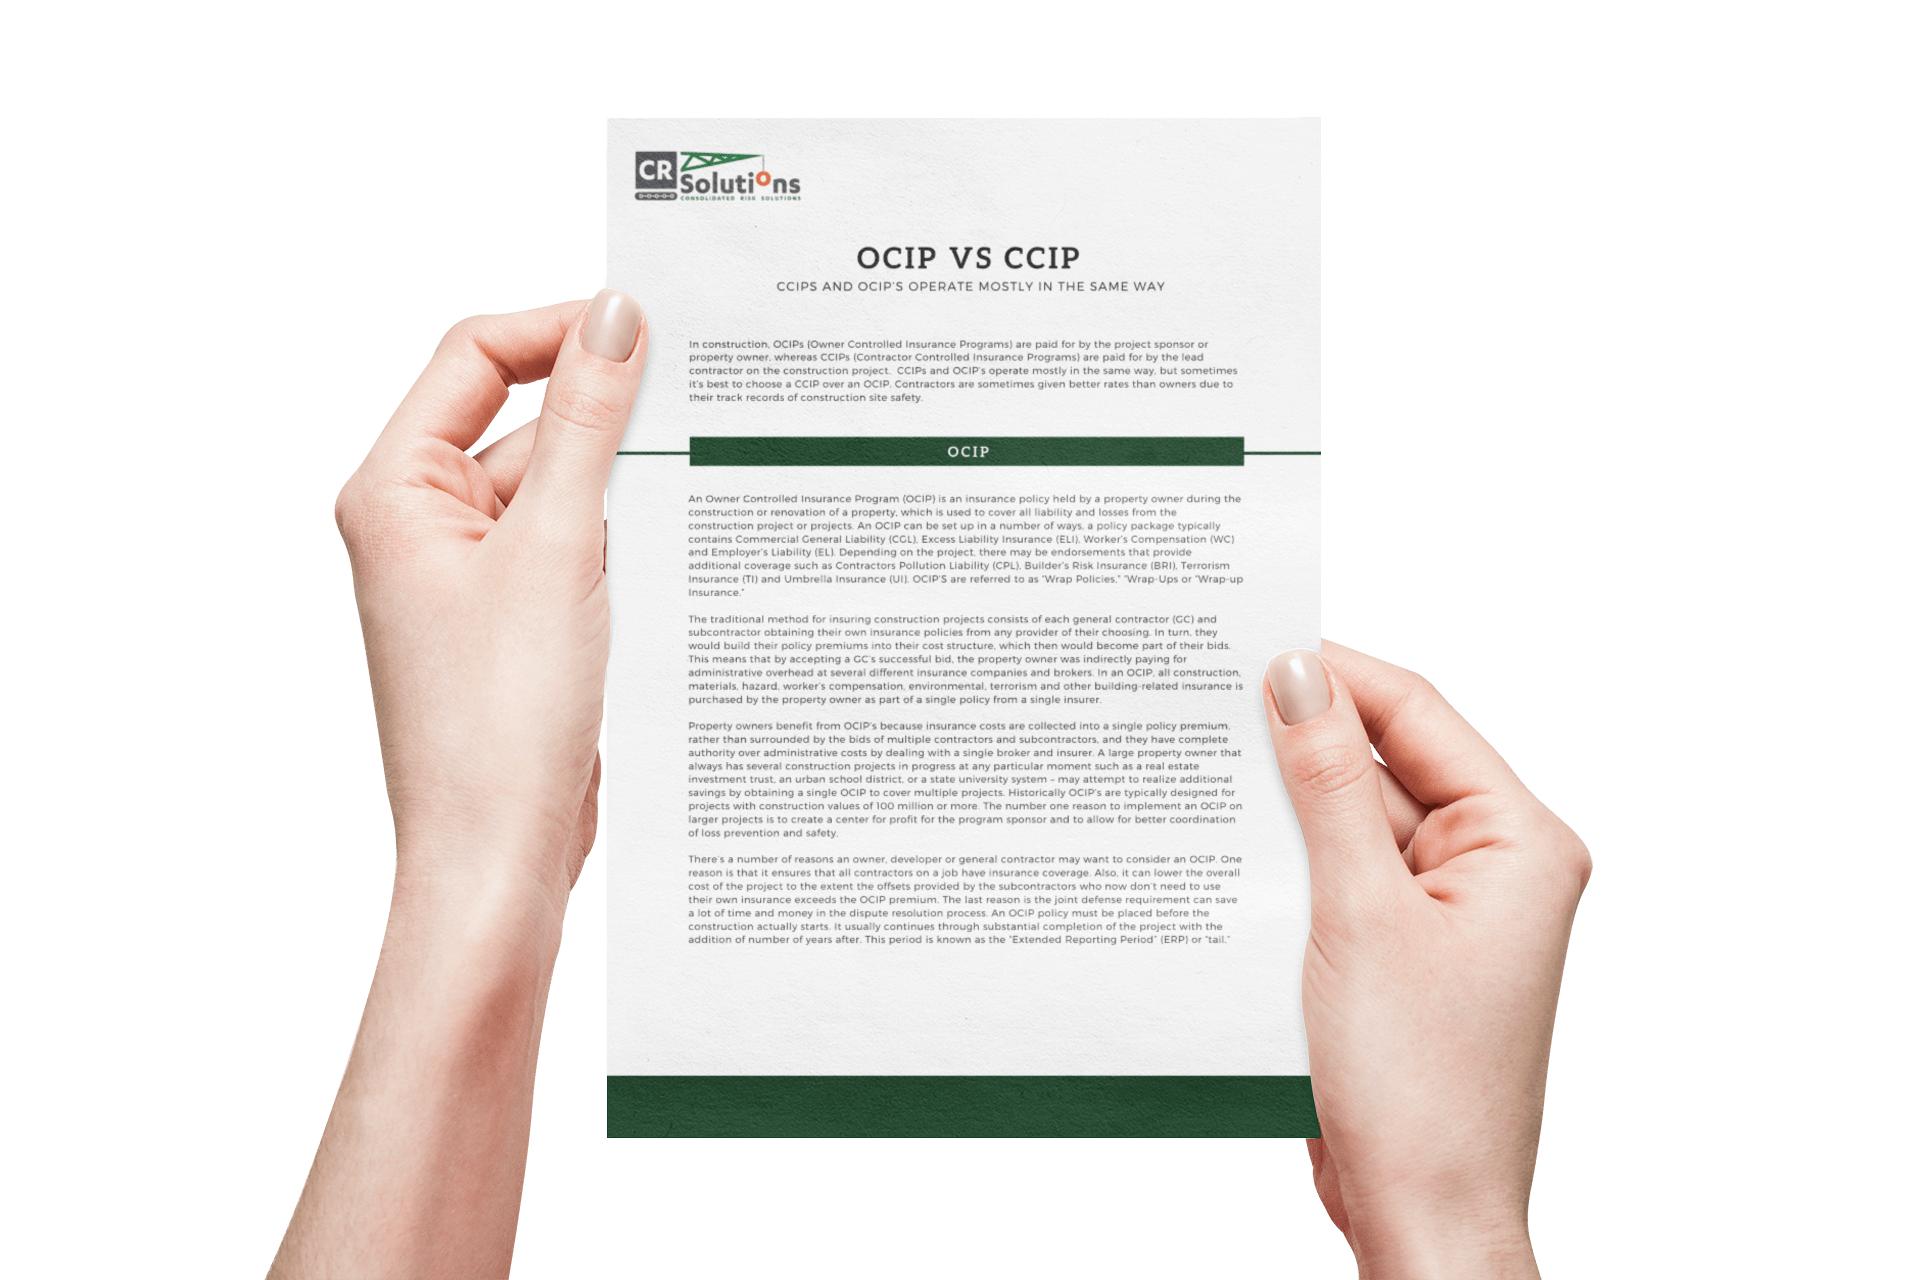 Download the OCIP vs CCIP guide